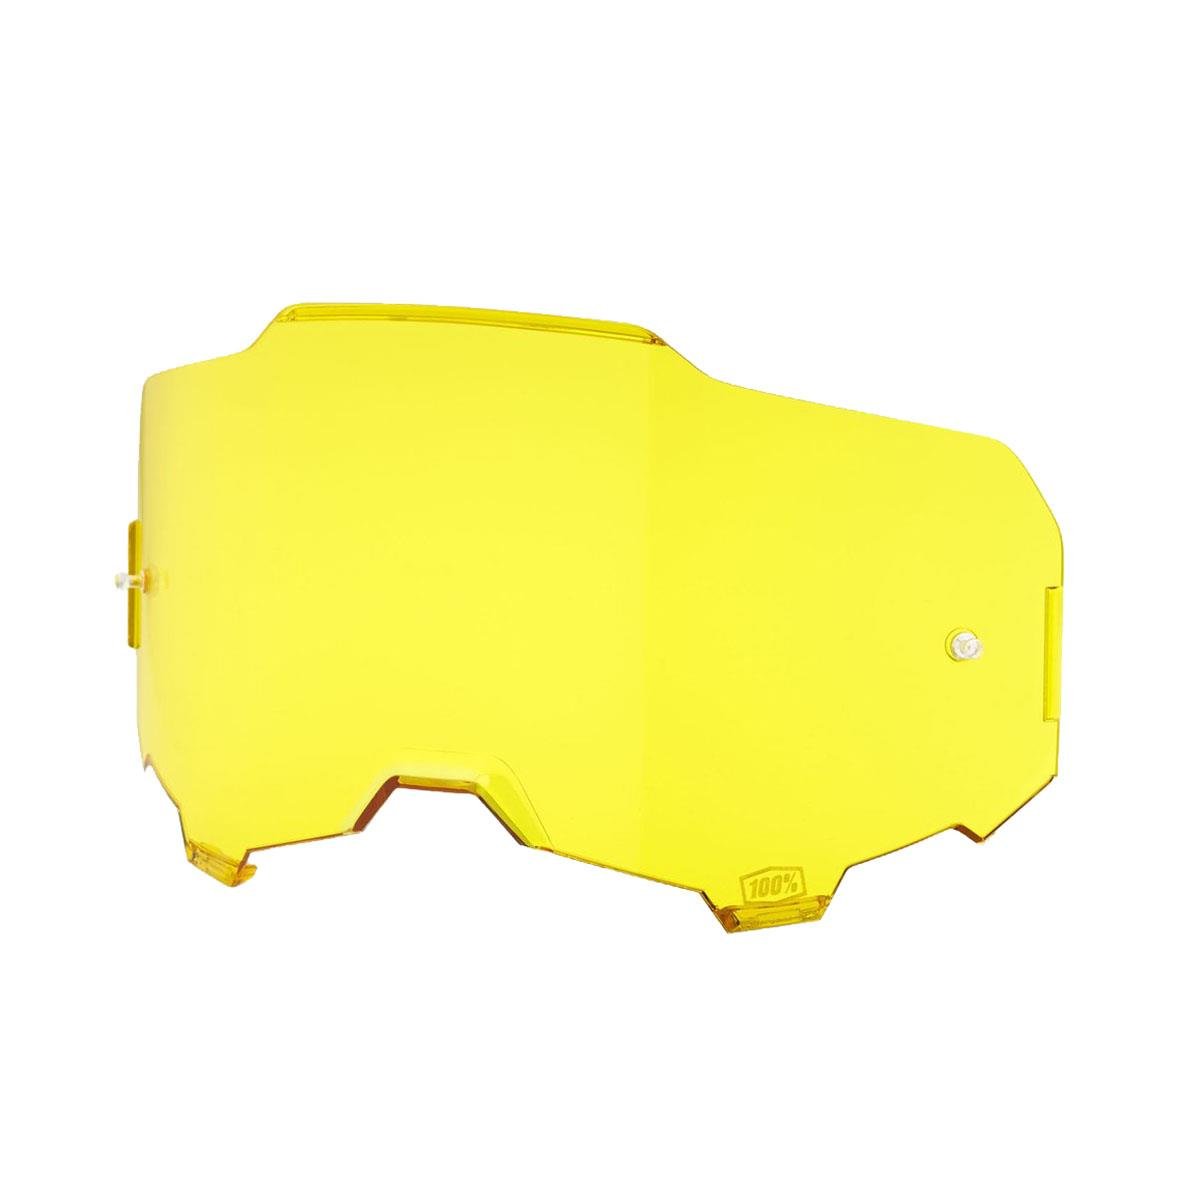 100% Replacement Lens Armega Yellow - Anti Fog